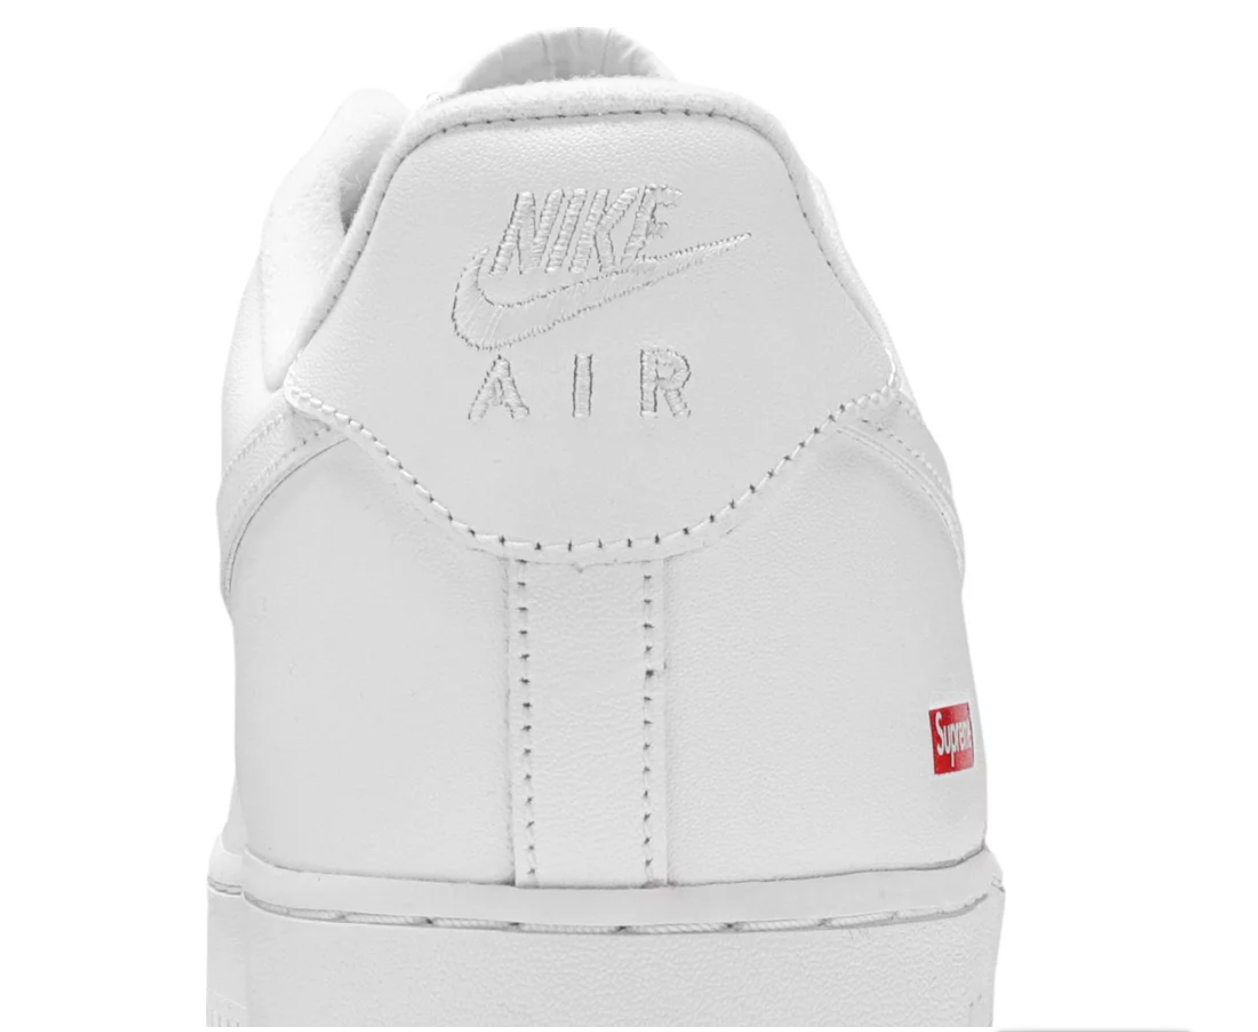 Classic White Supreme X Air Force 1 Low 'Box Logo’ Lacrosse Shoes  - White Back 